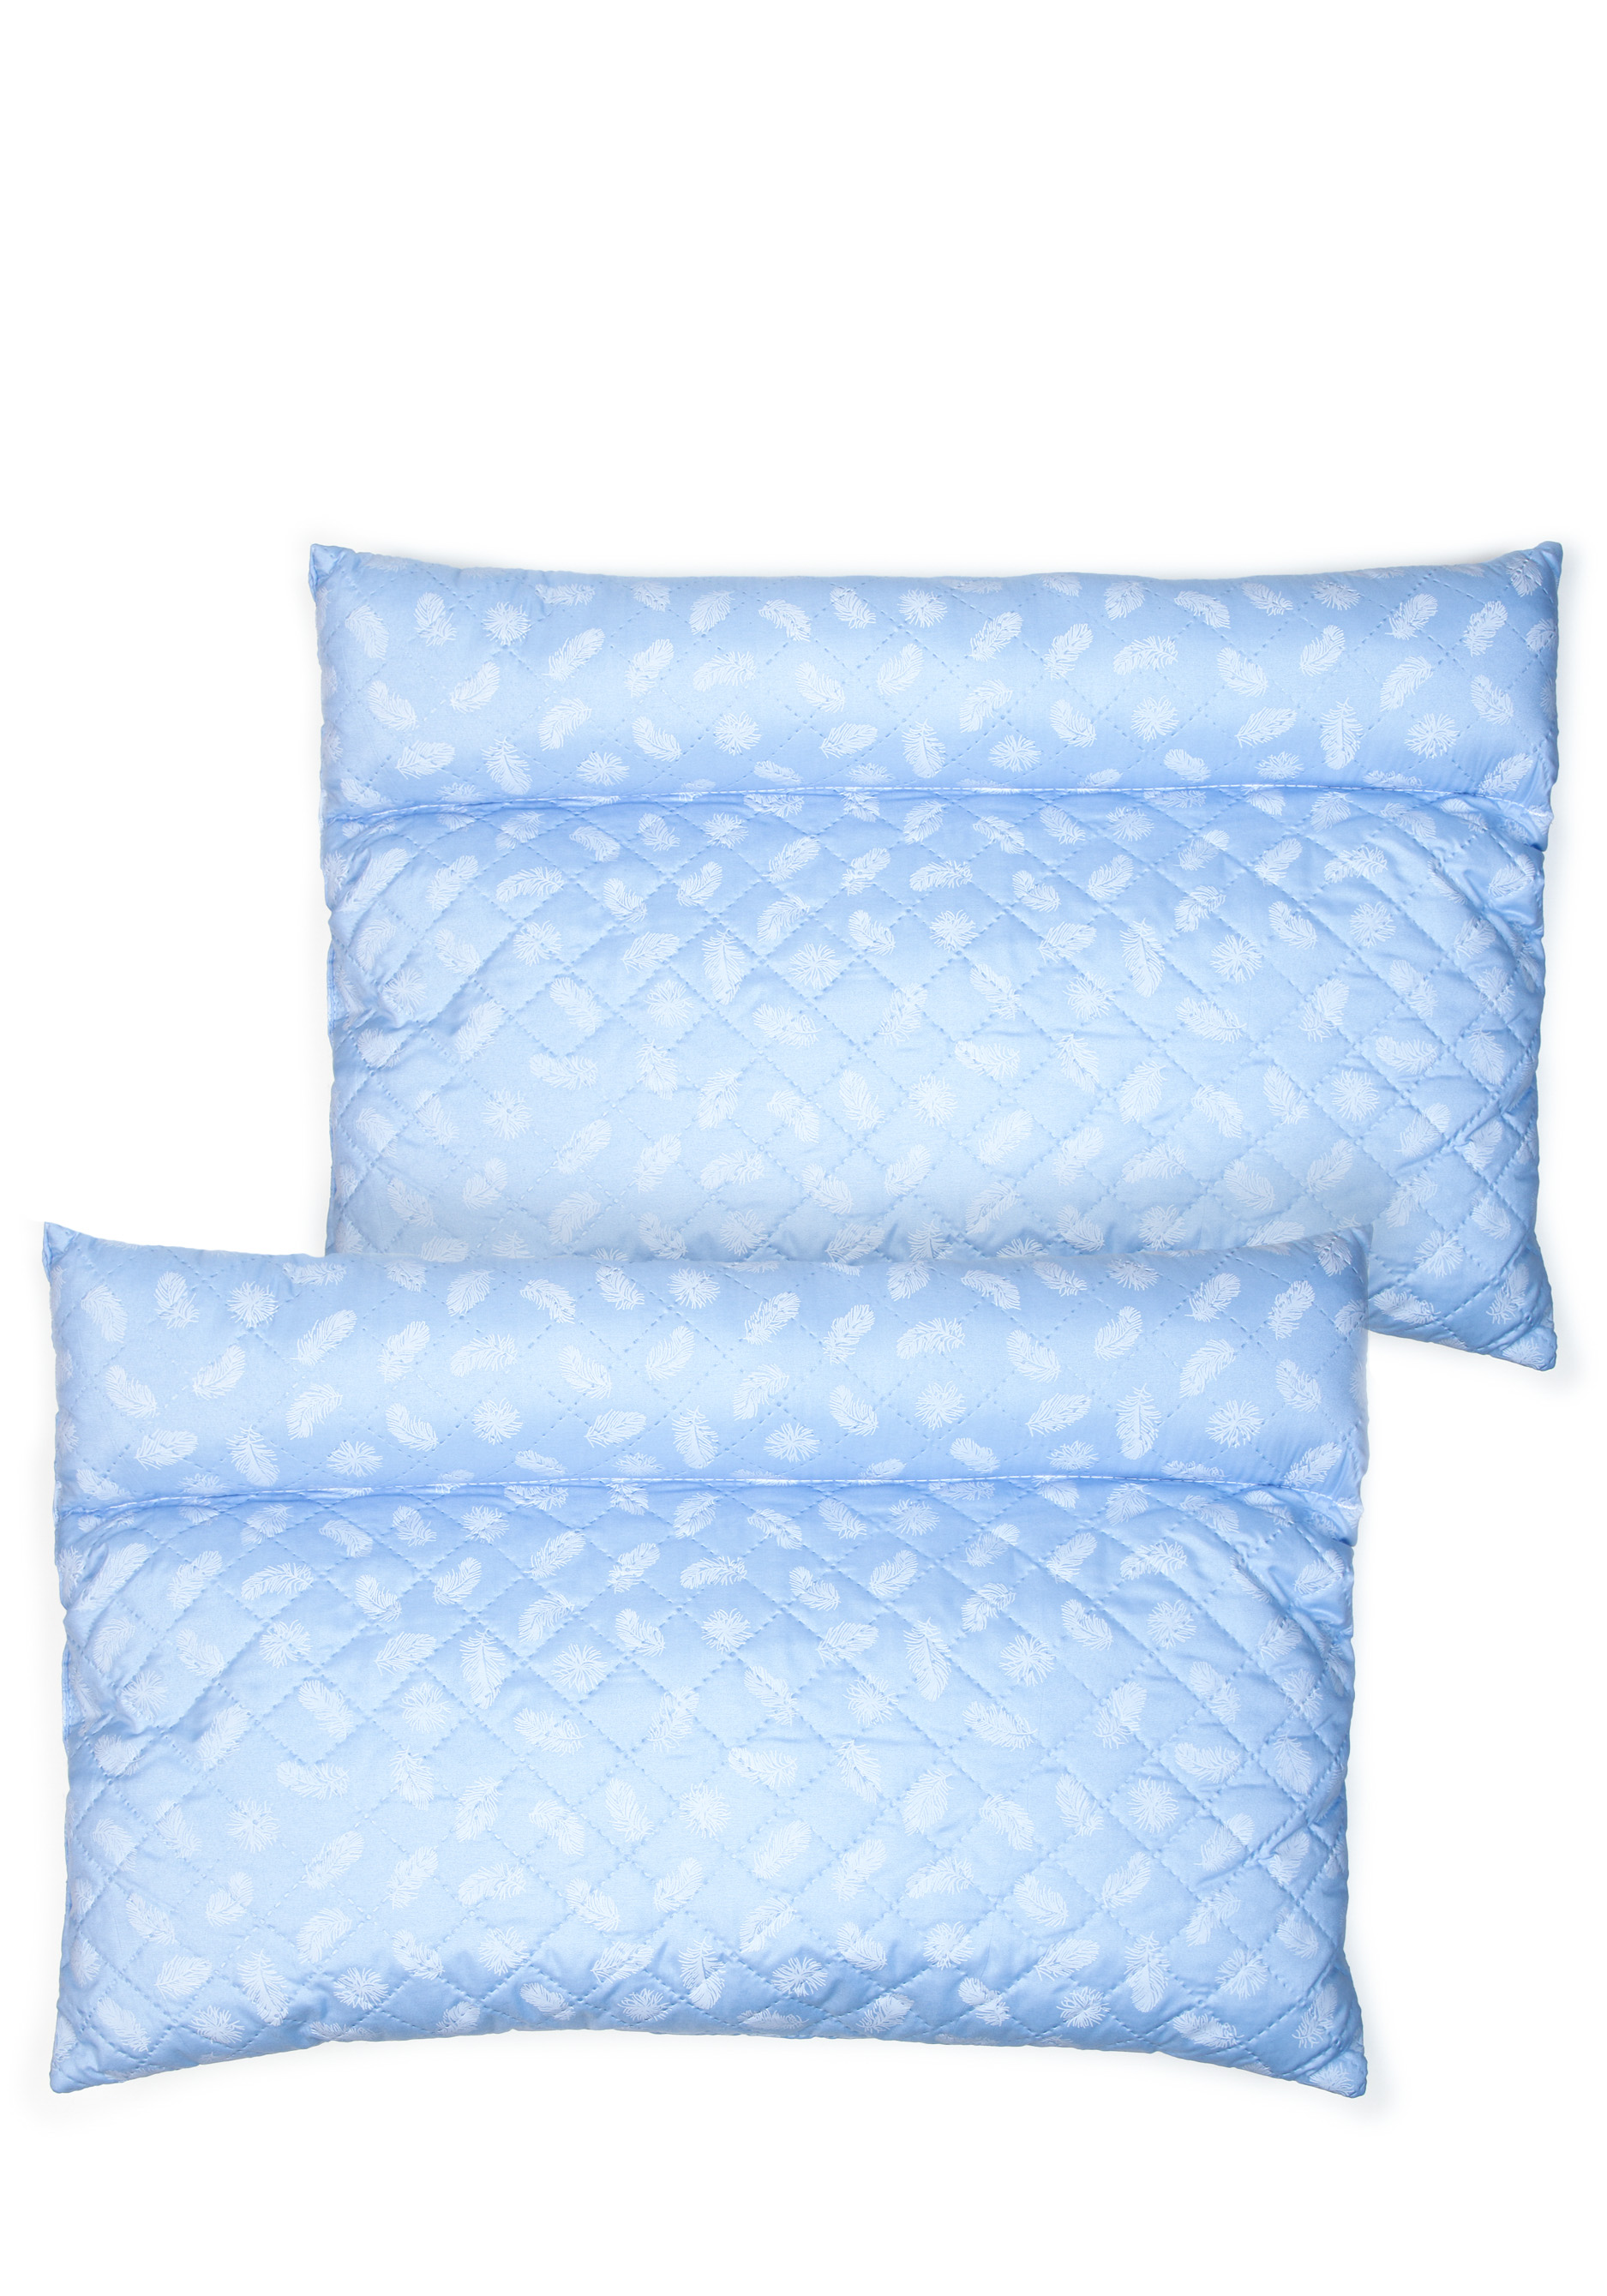 Подушка с валиком под шeю, 2 шт. Matex, цвет голубой, размер 50*70